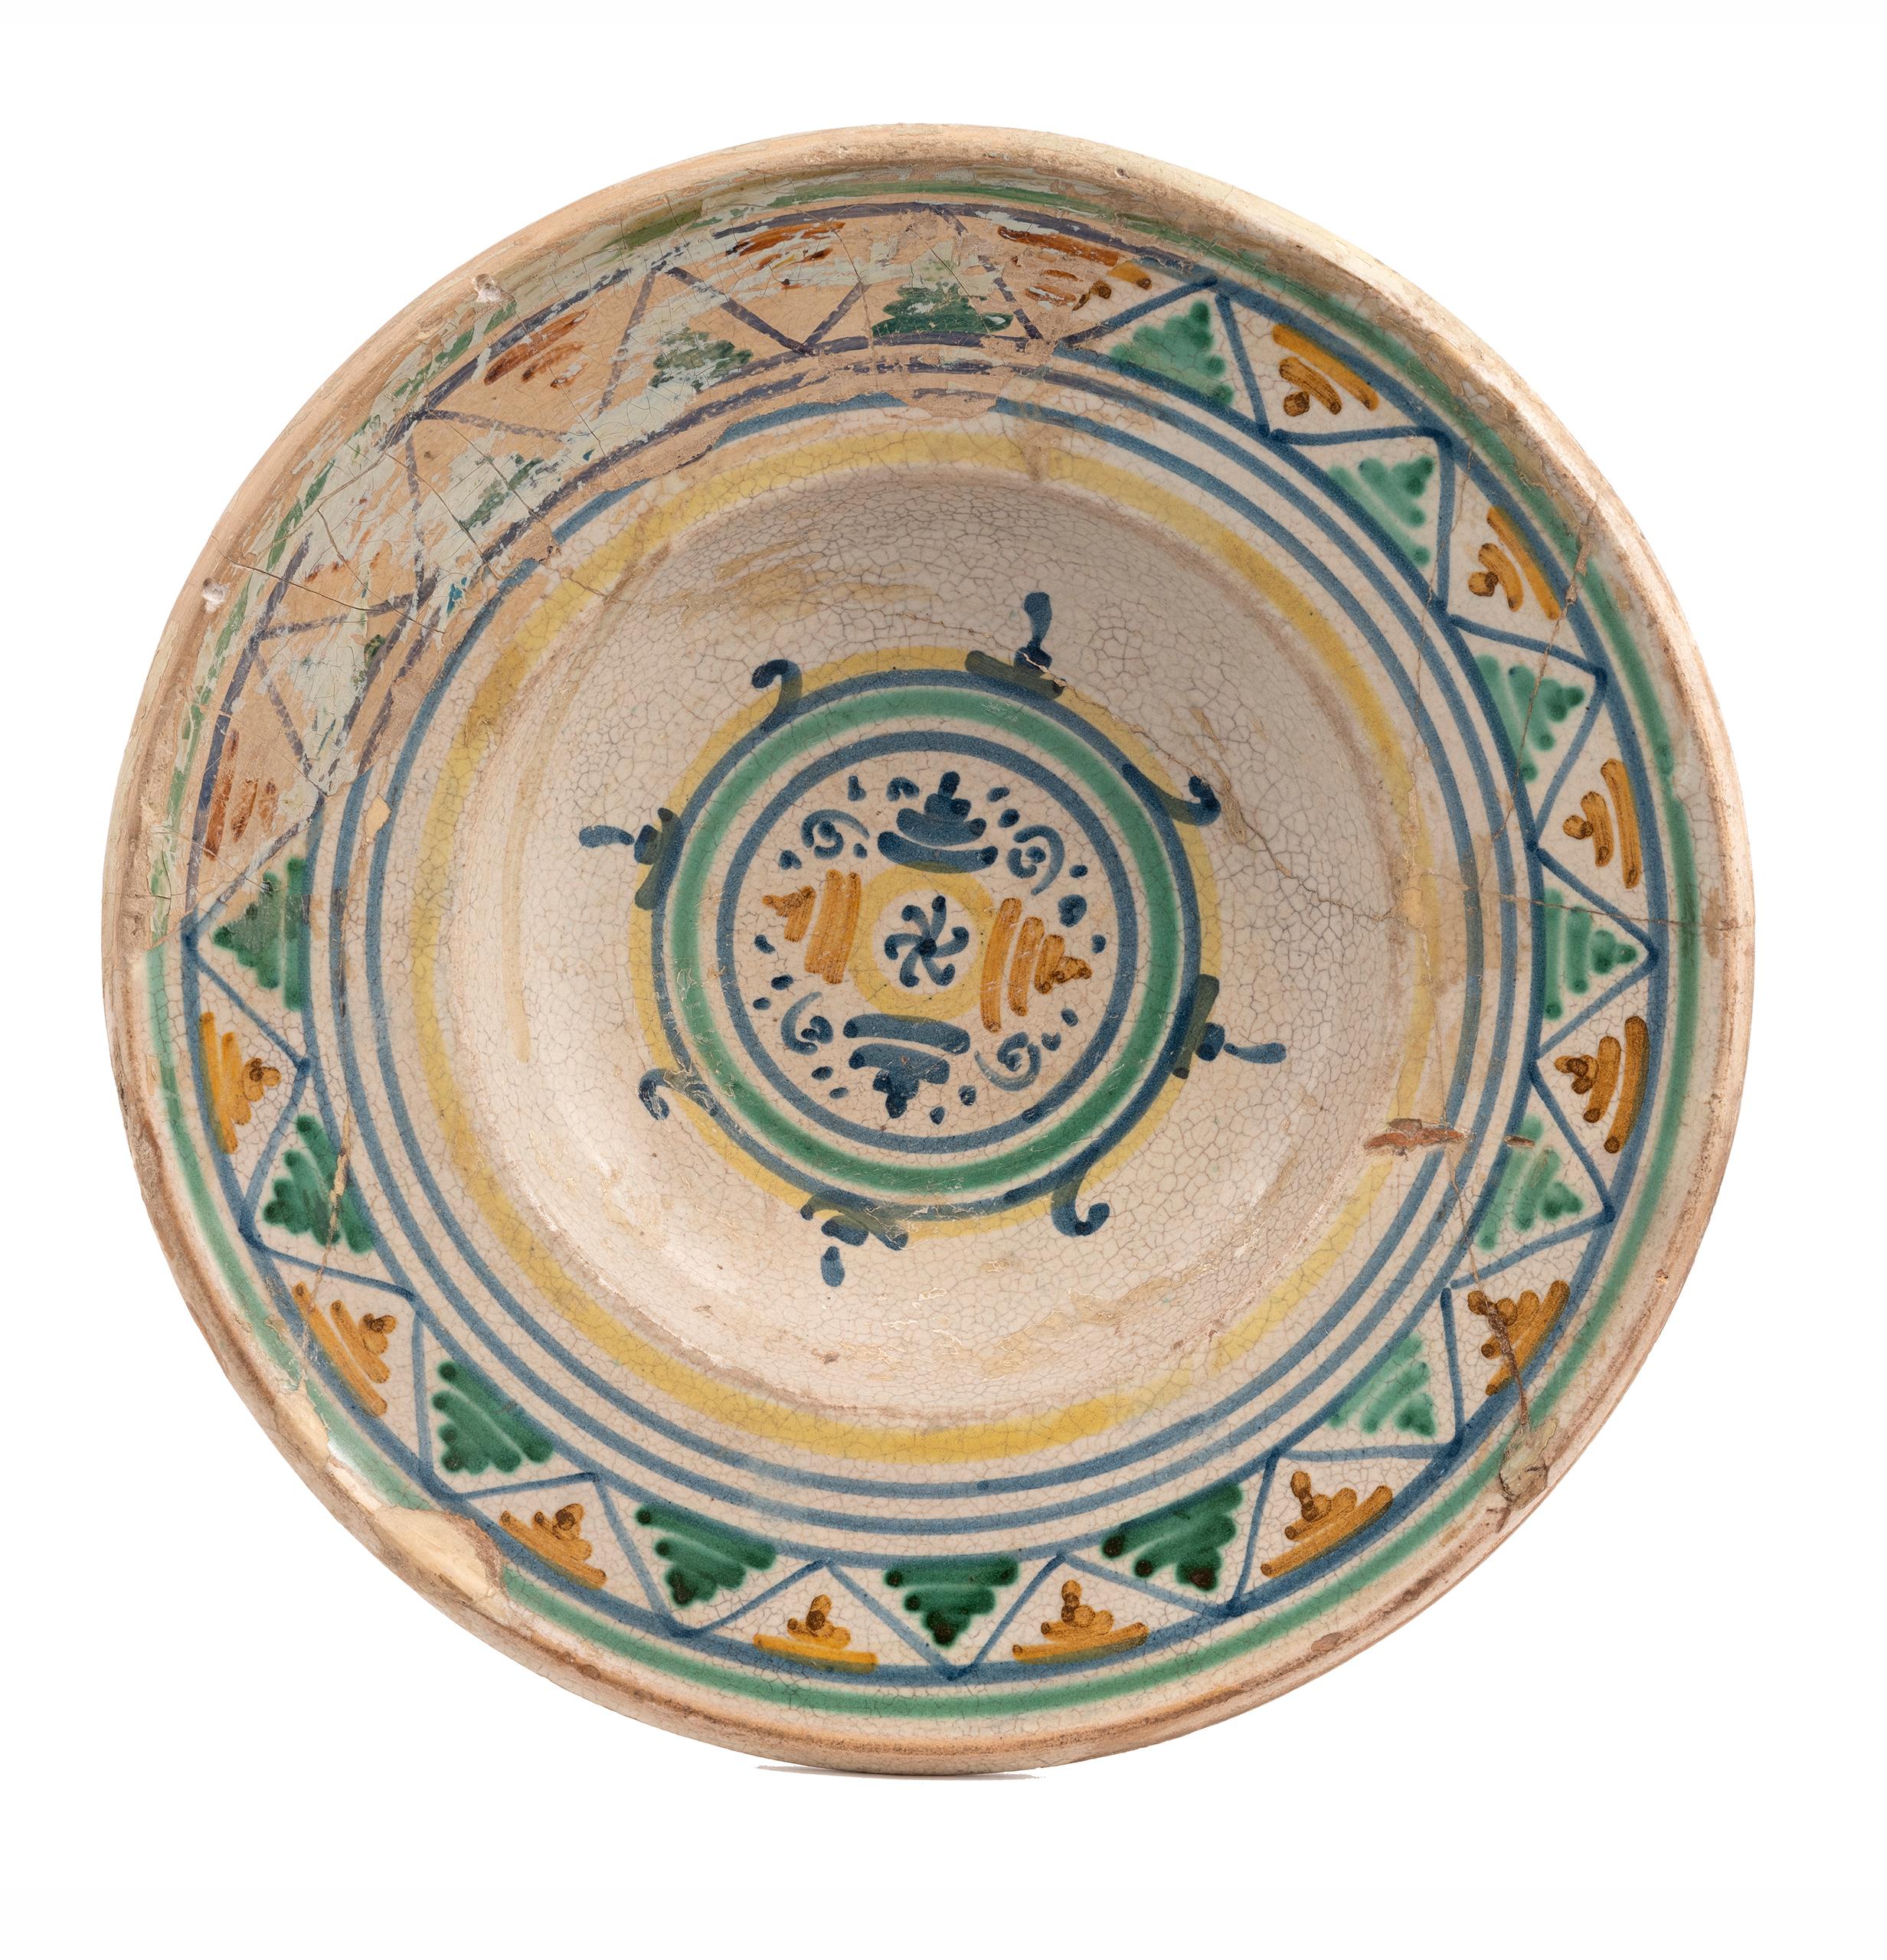 meridiana ceramiche made in italy